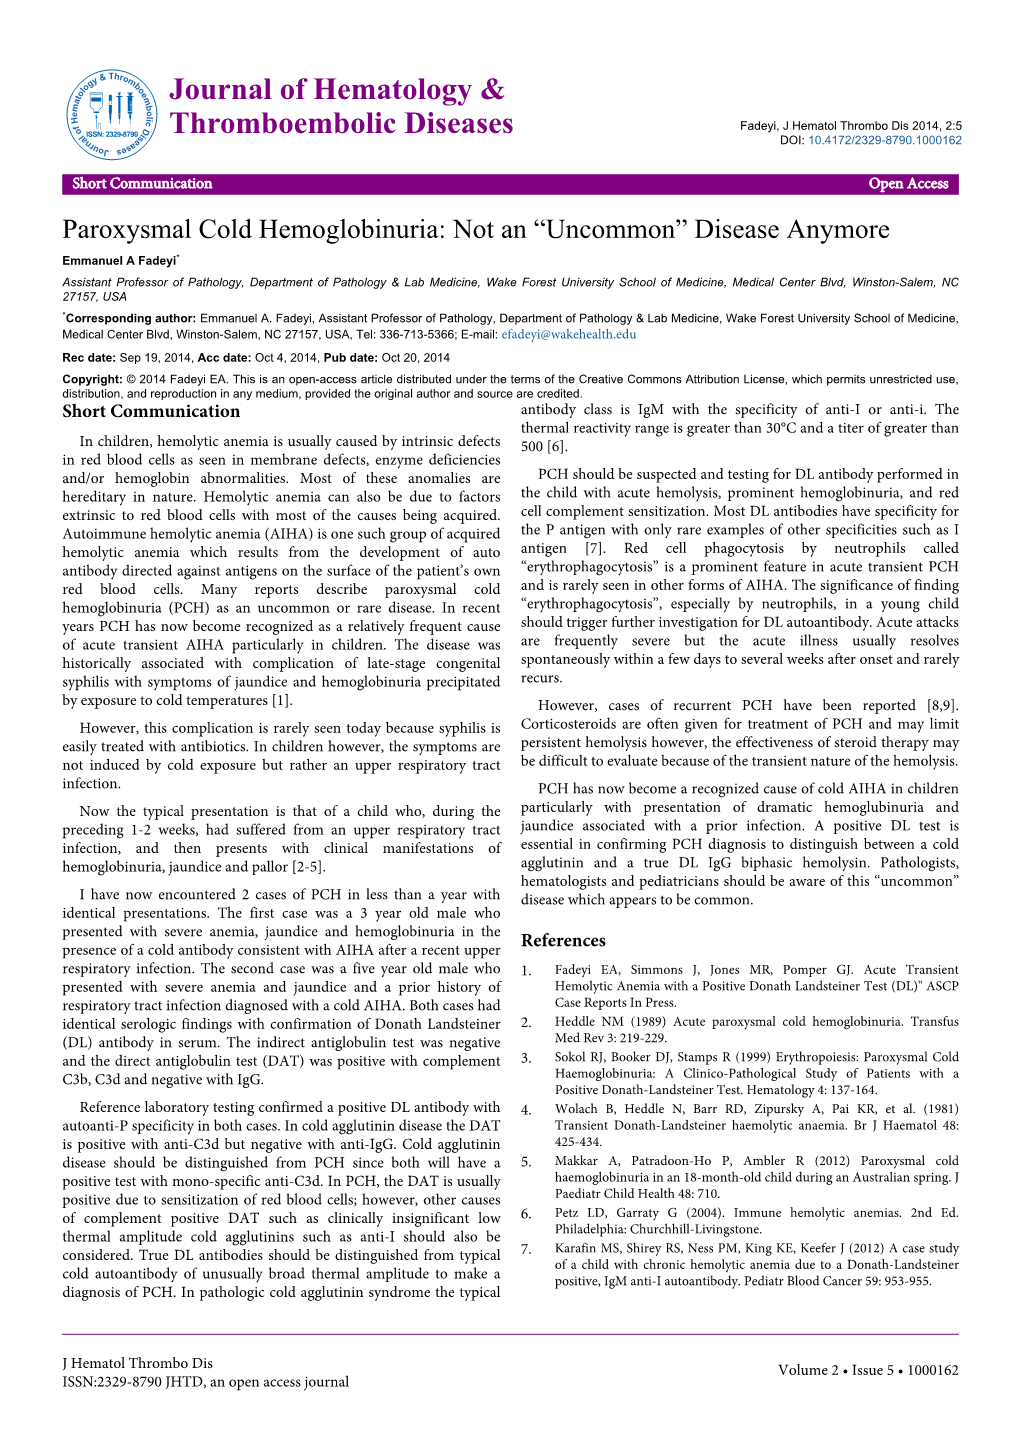 Paroxysmal Cold Hemoglobinuria: Not an “Uncommon” Disease Anymore